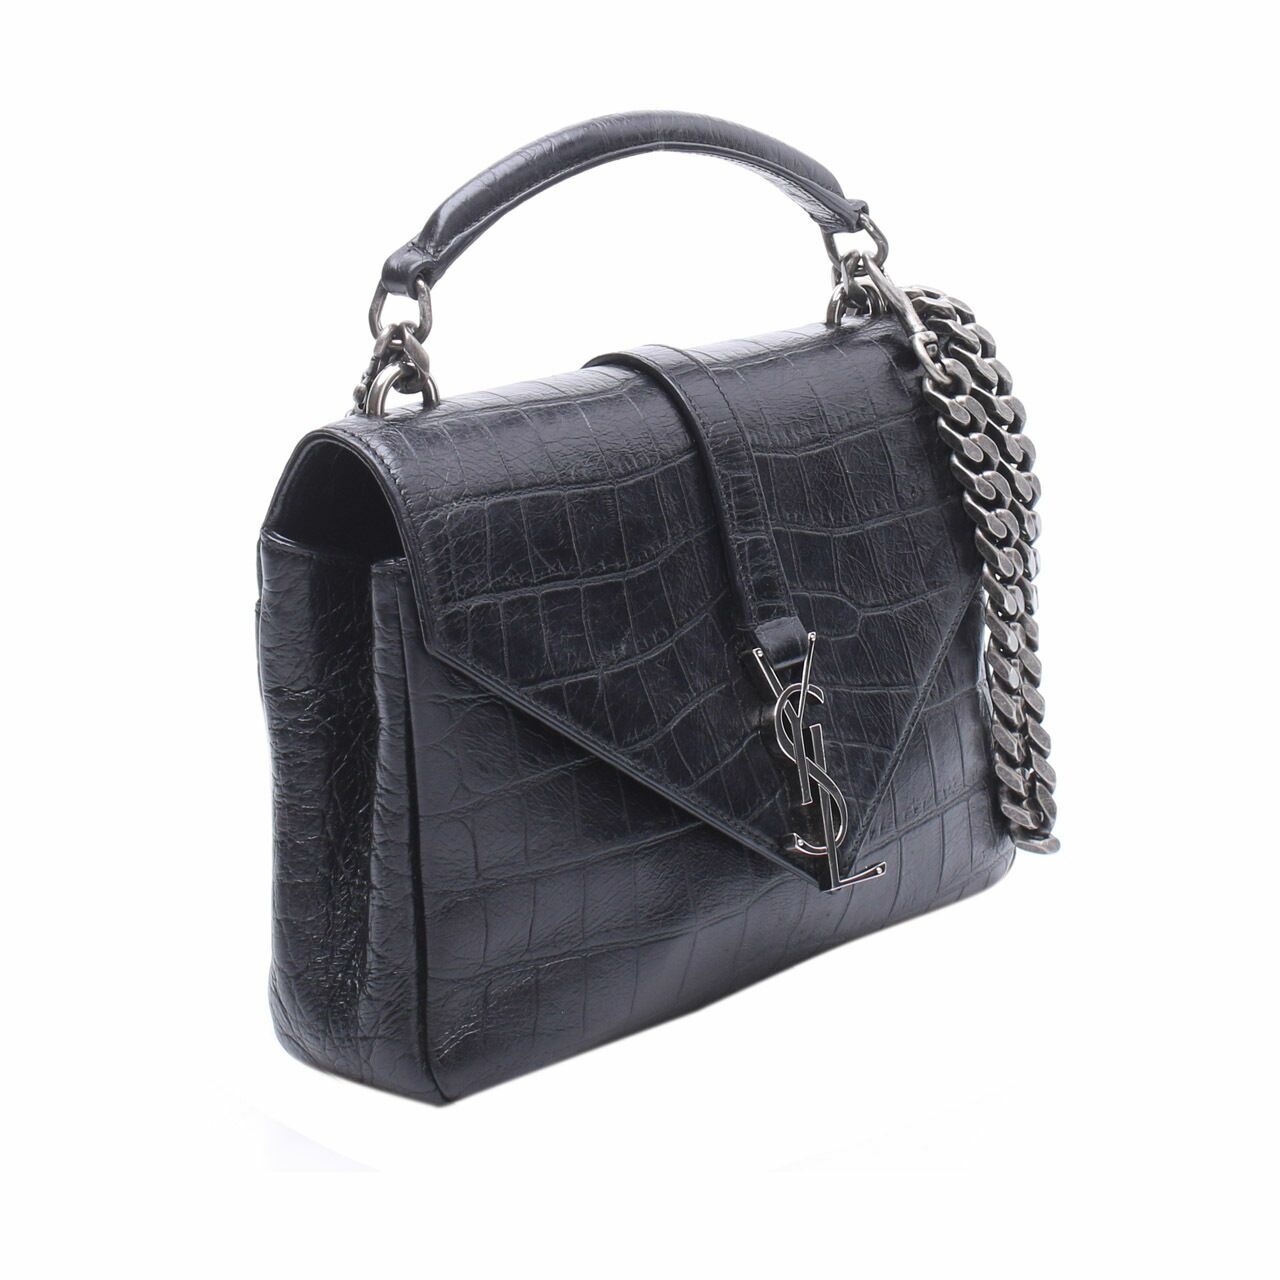 Yves Saint Laurent Black Leather Satchel Bag